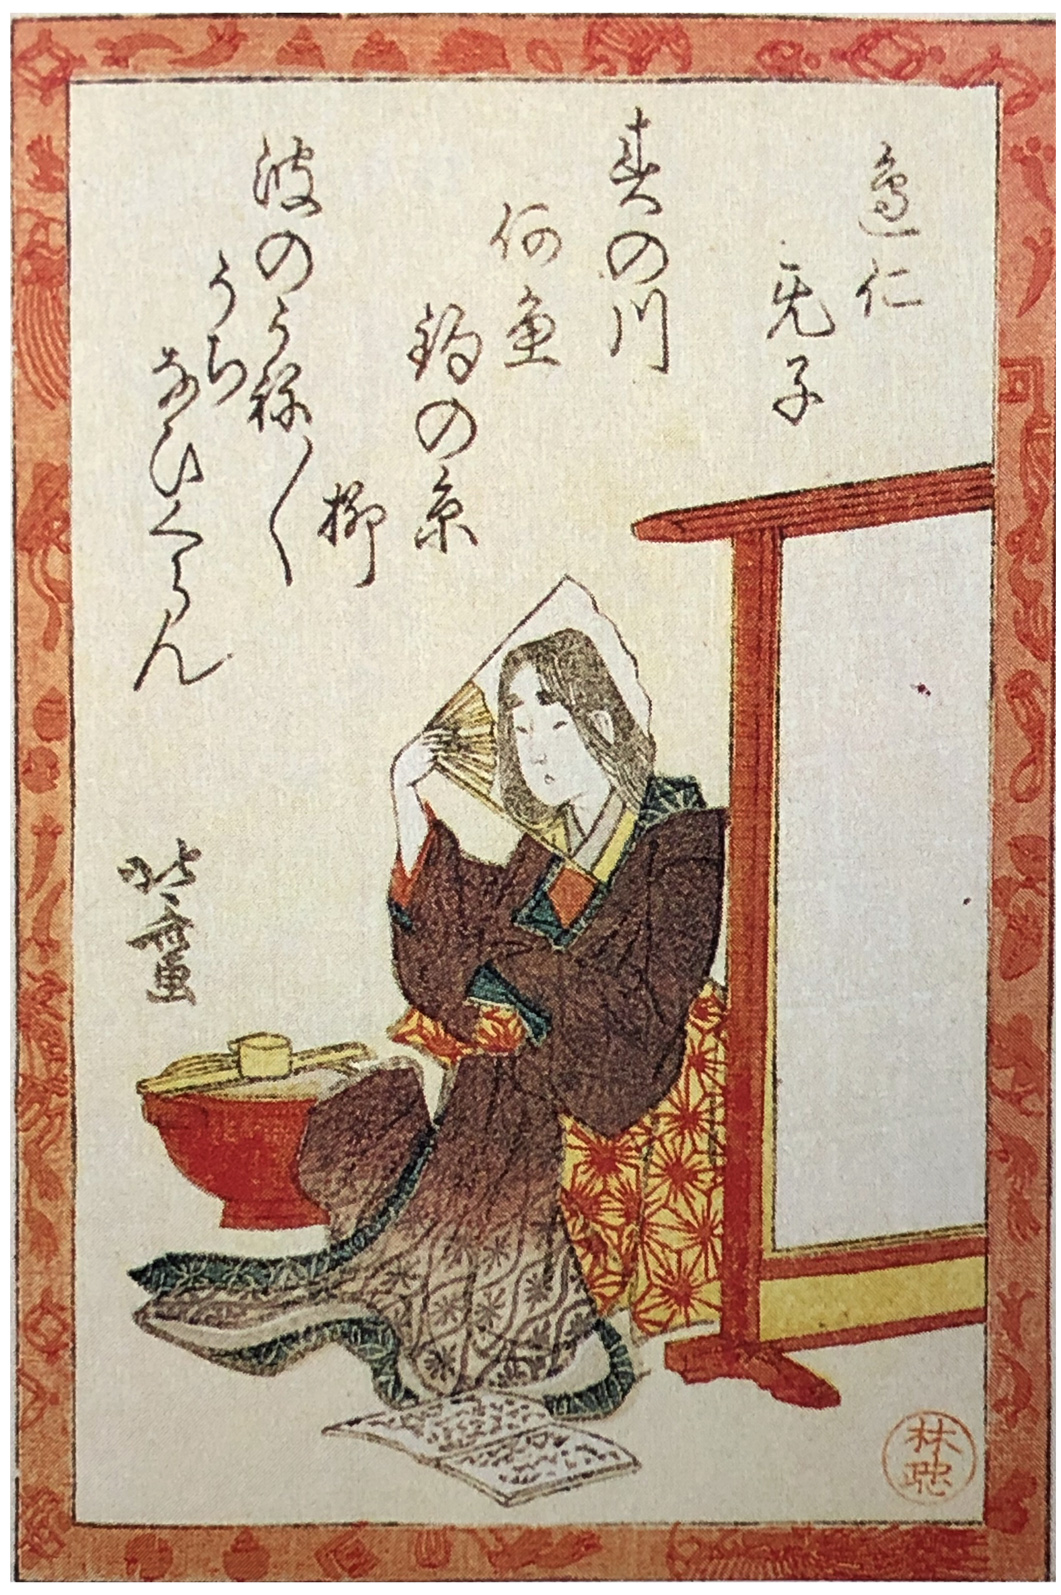 Hokusai - Poet #28 - 100 Kyoka Poets